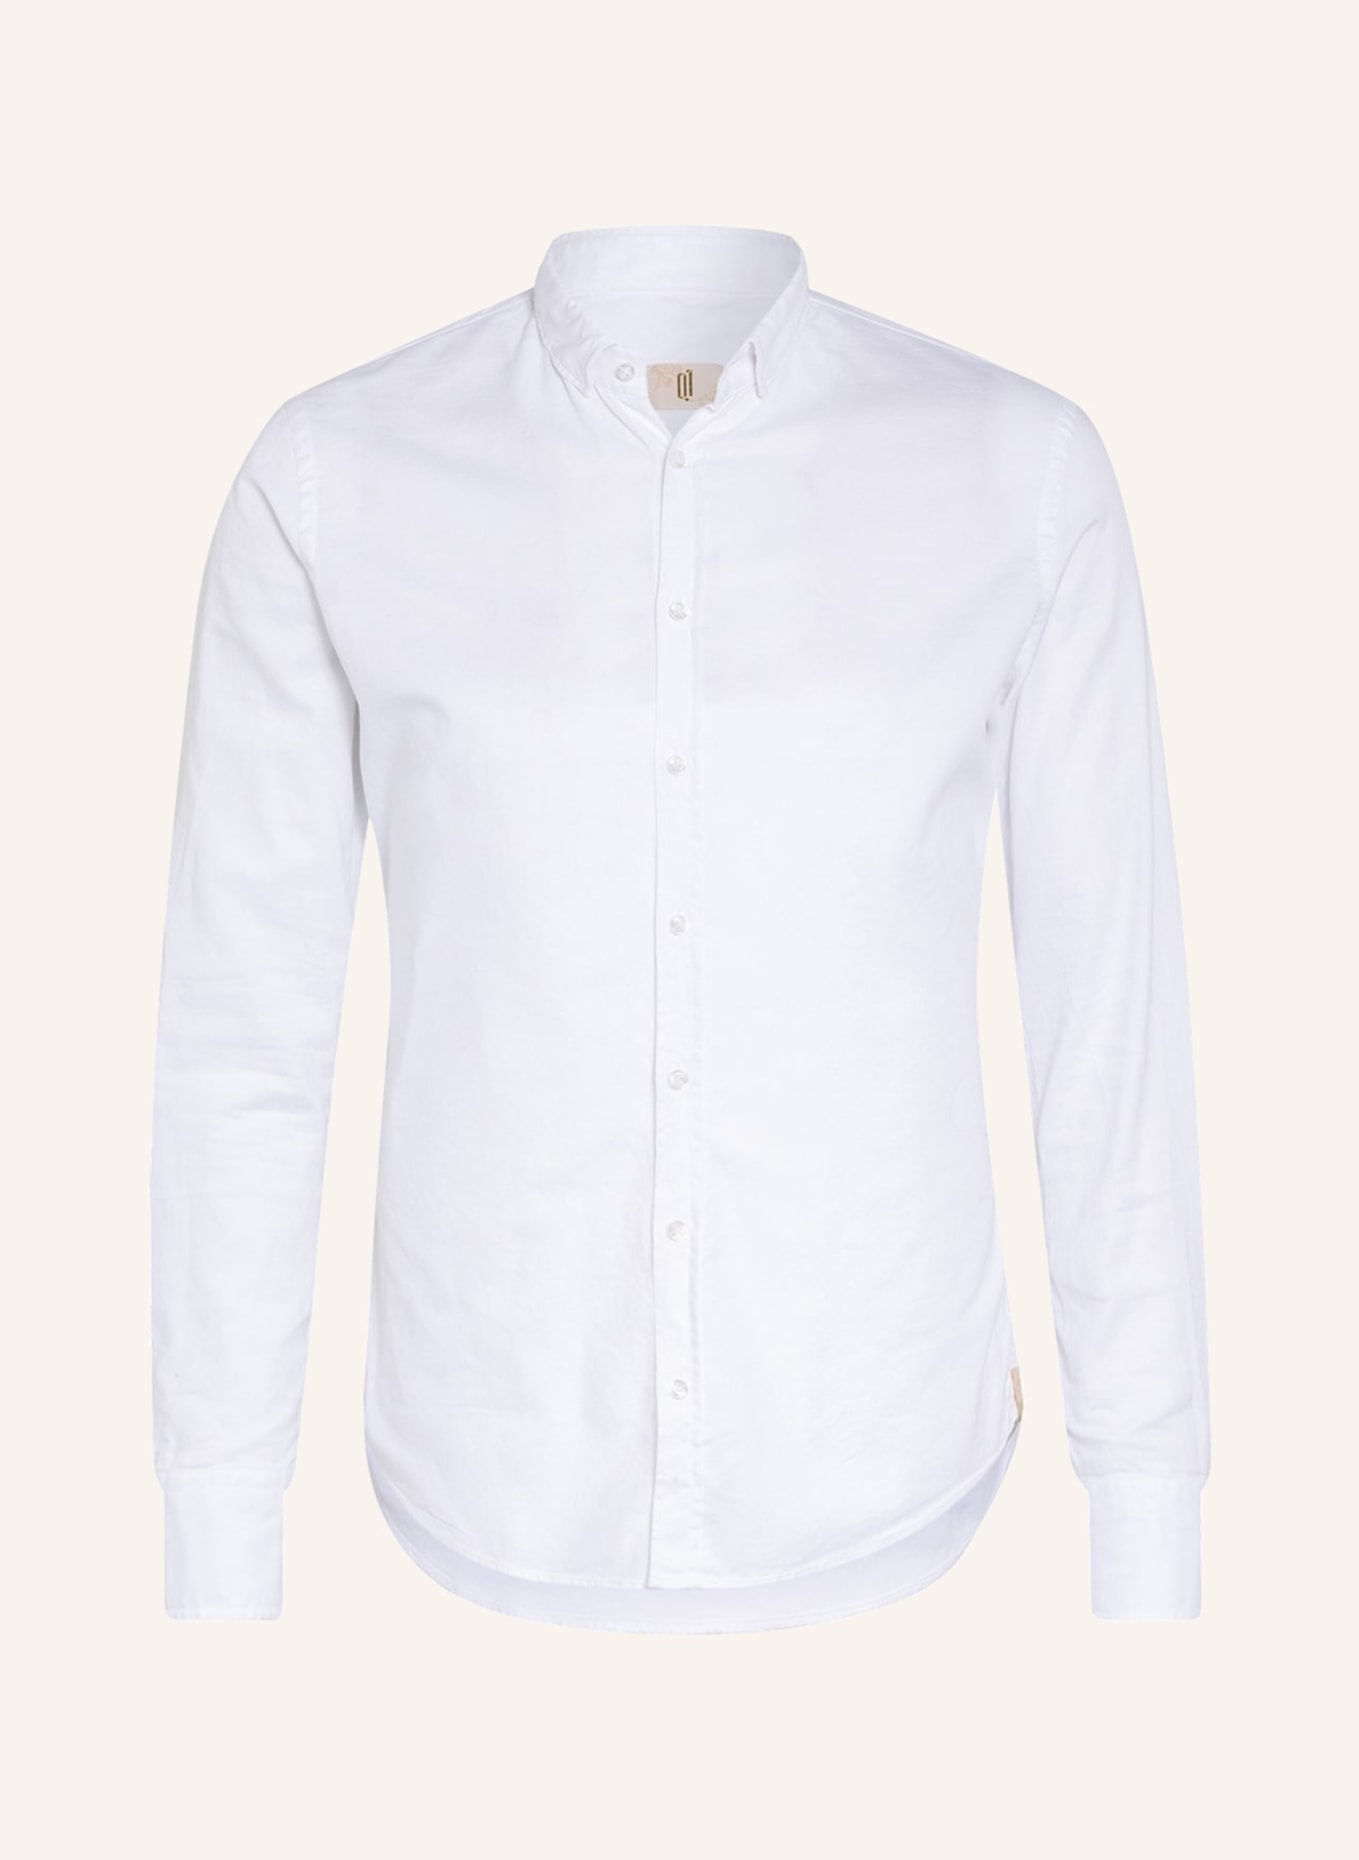 Q1 Manufaktur Hemd Extra Slim Fit, Farbe: WEISS (Bild 1)